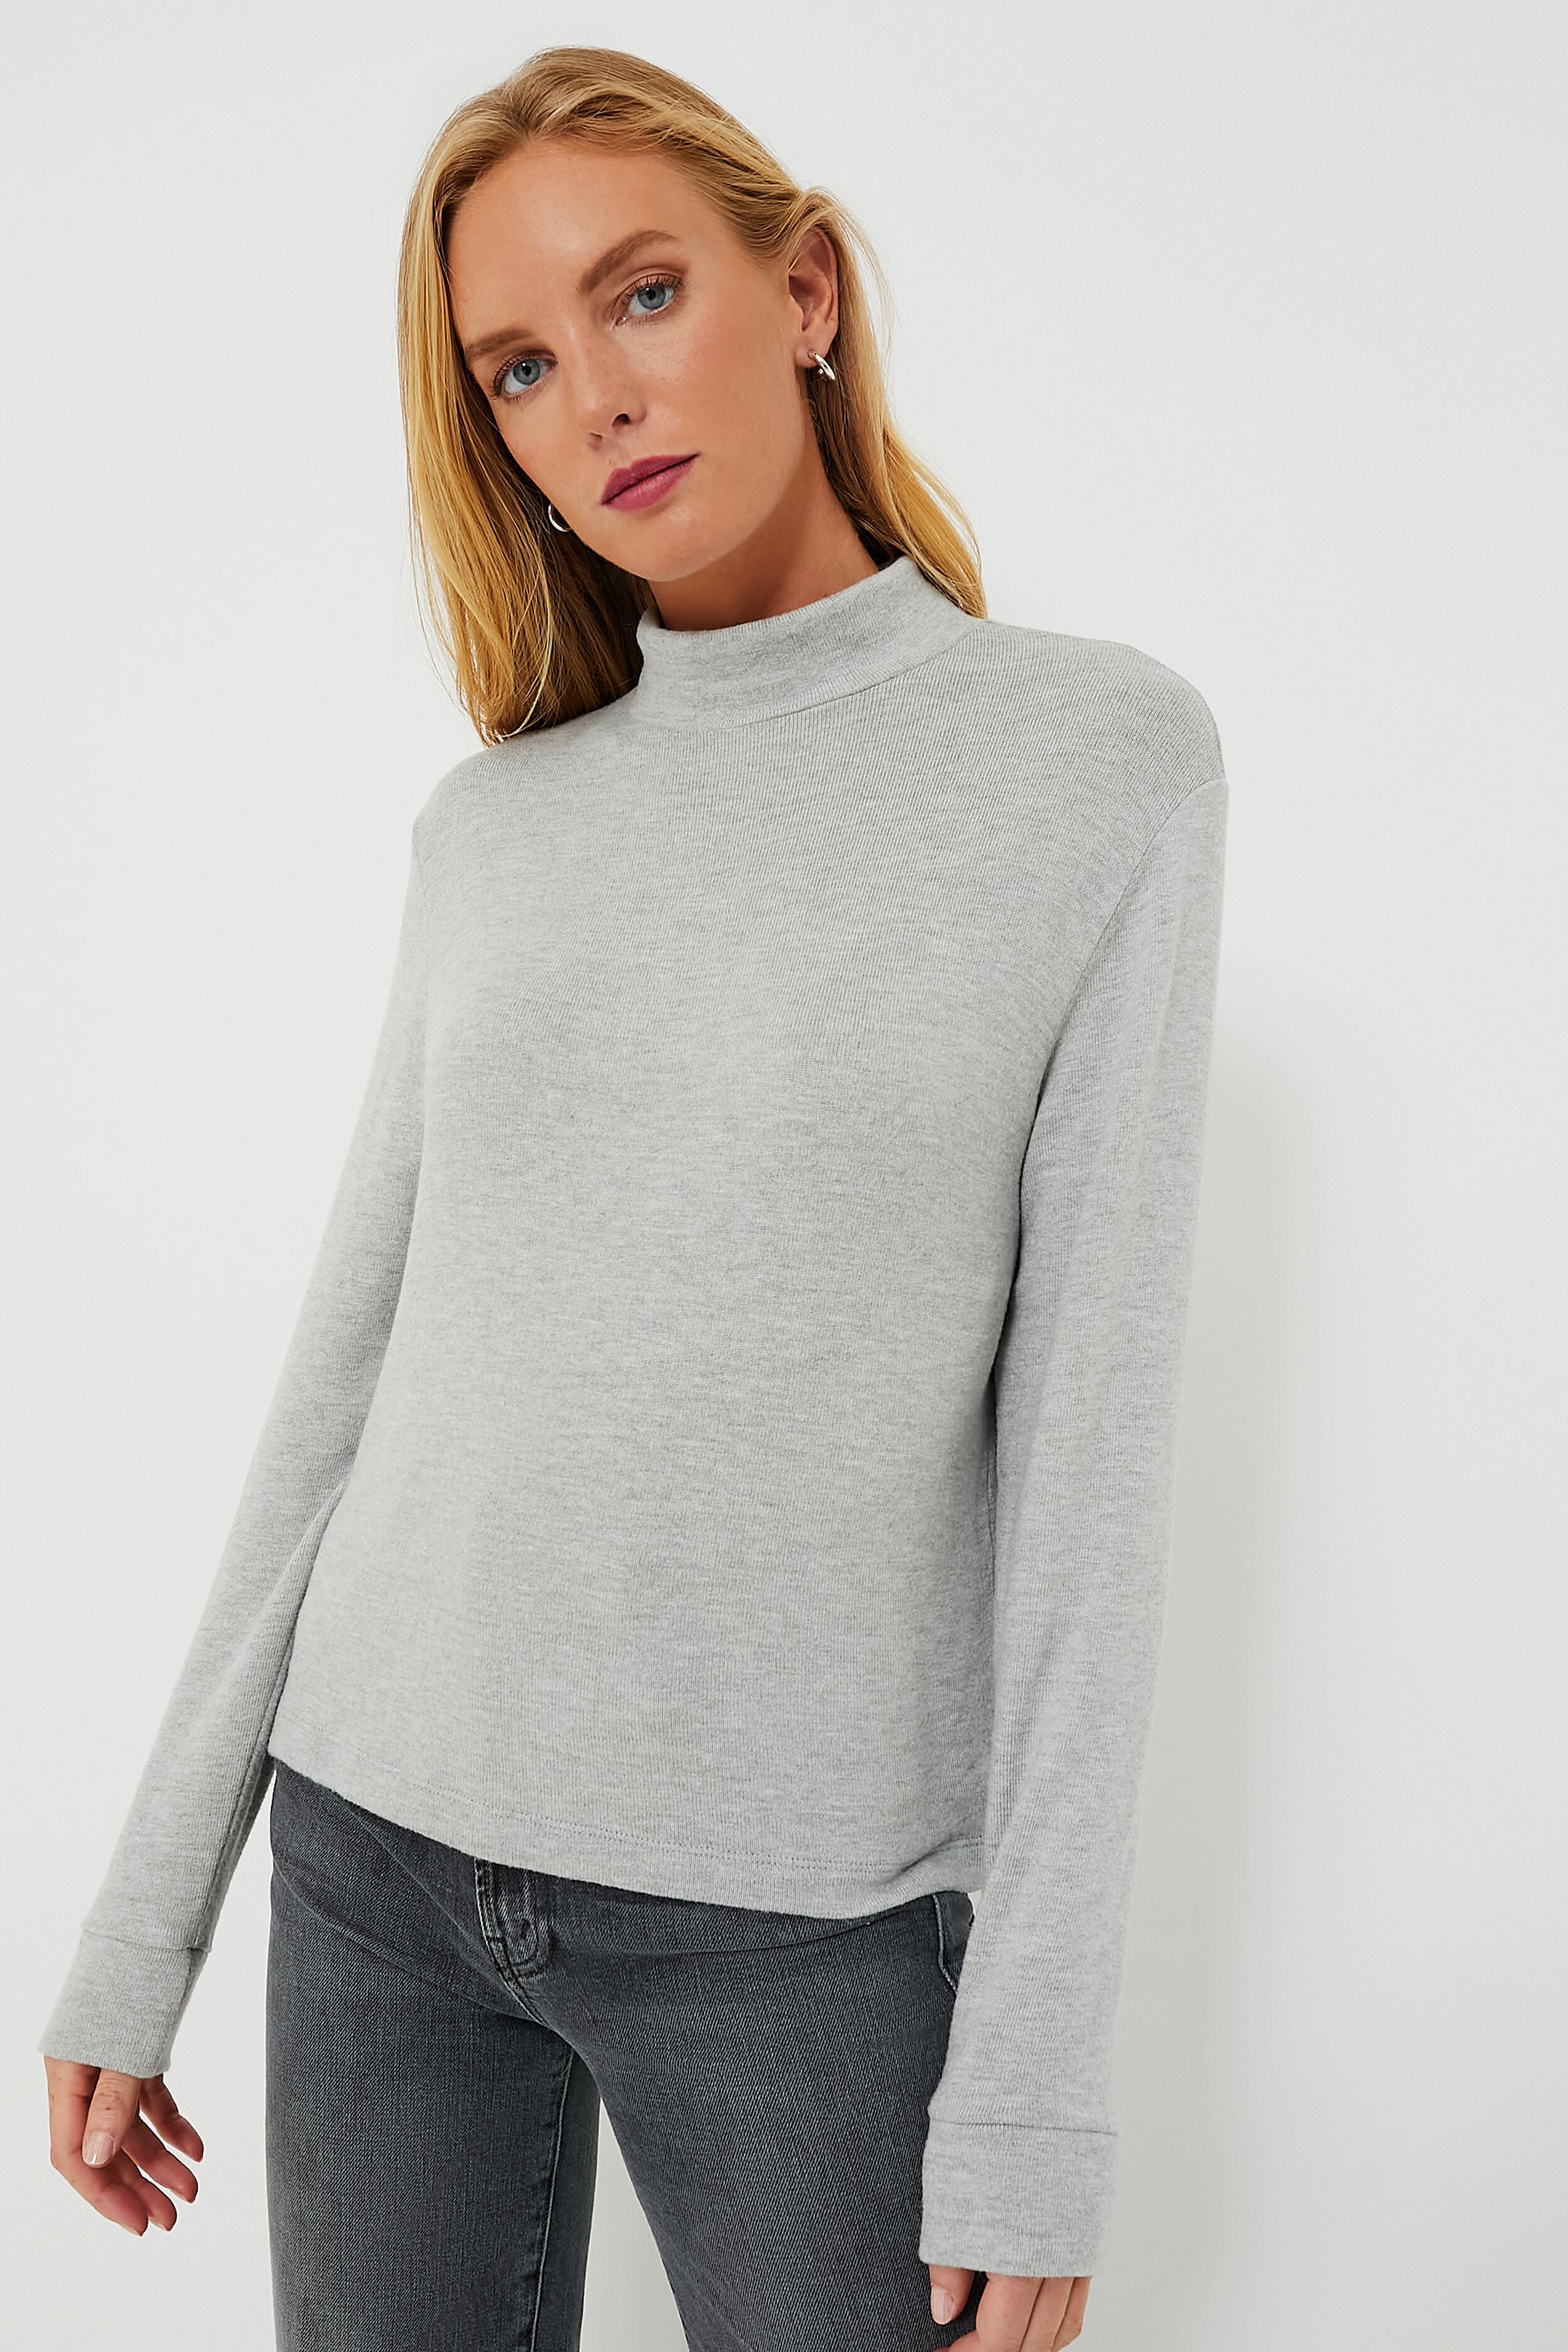 Heather Grey Sweater Turtleneck | DONNI.